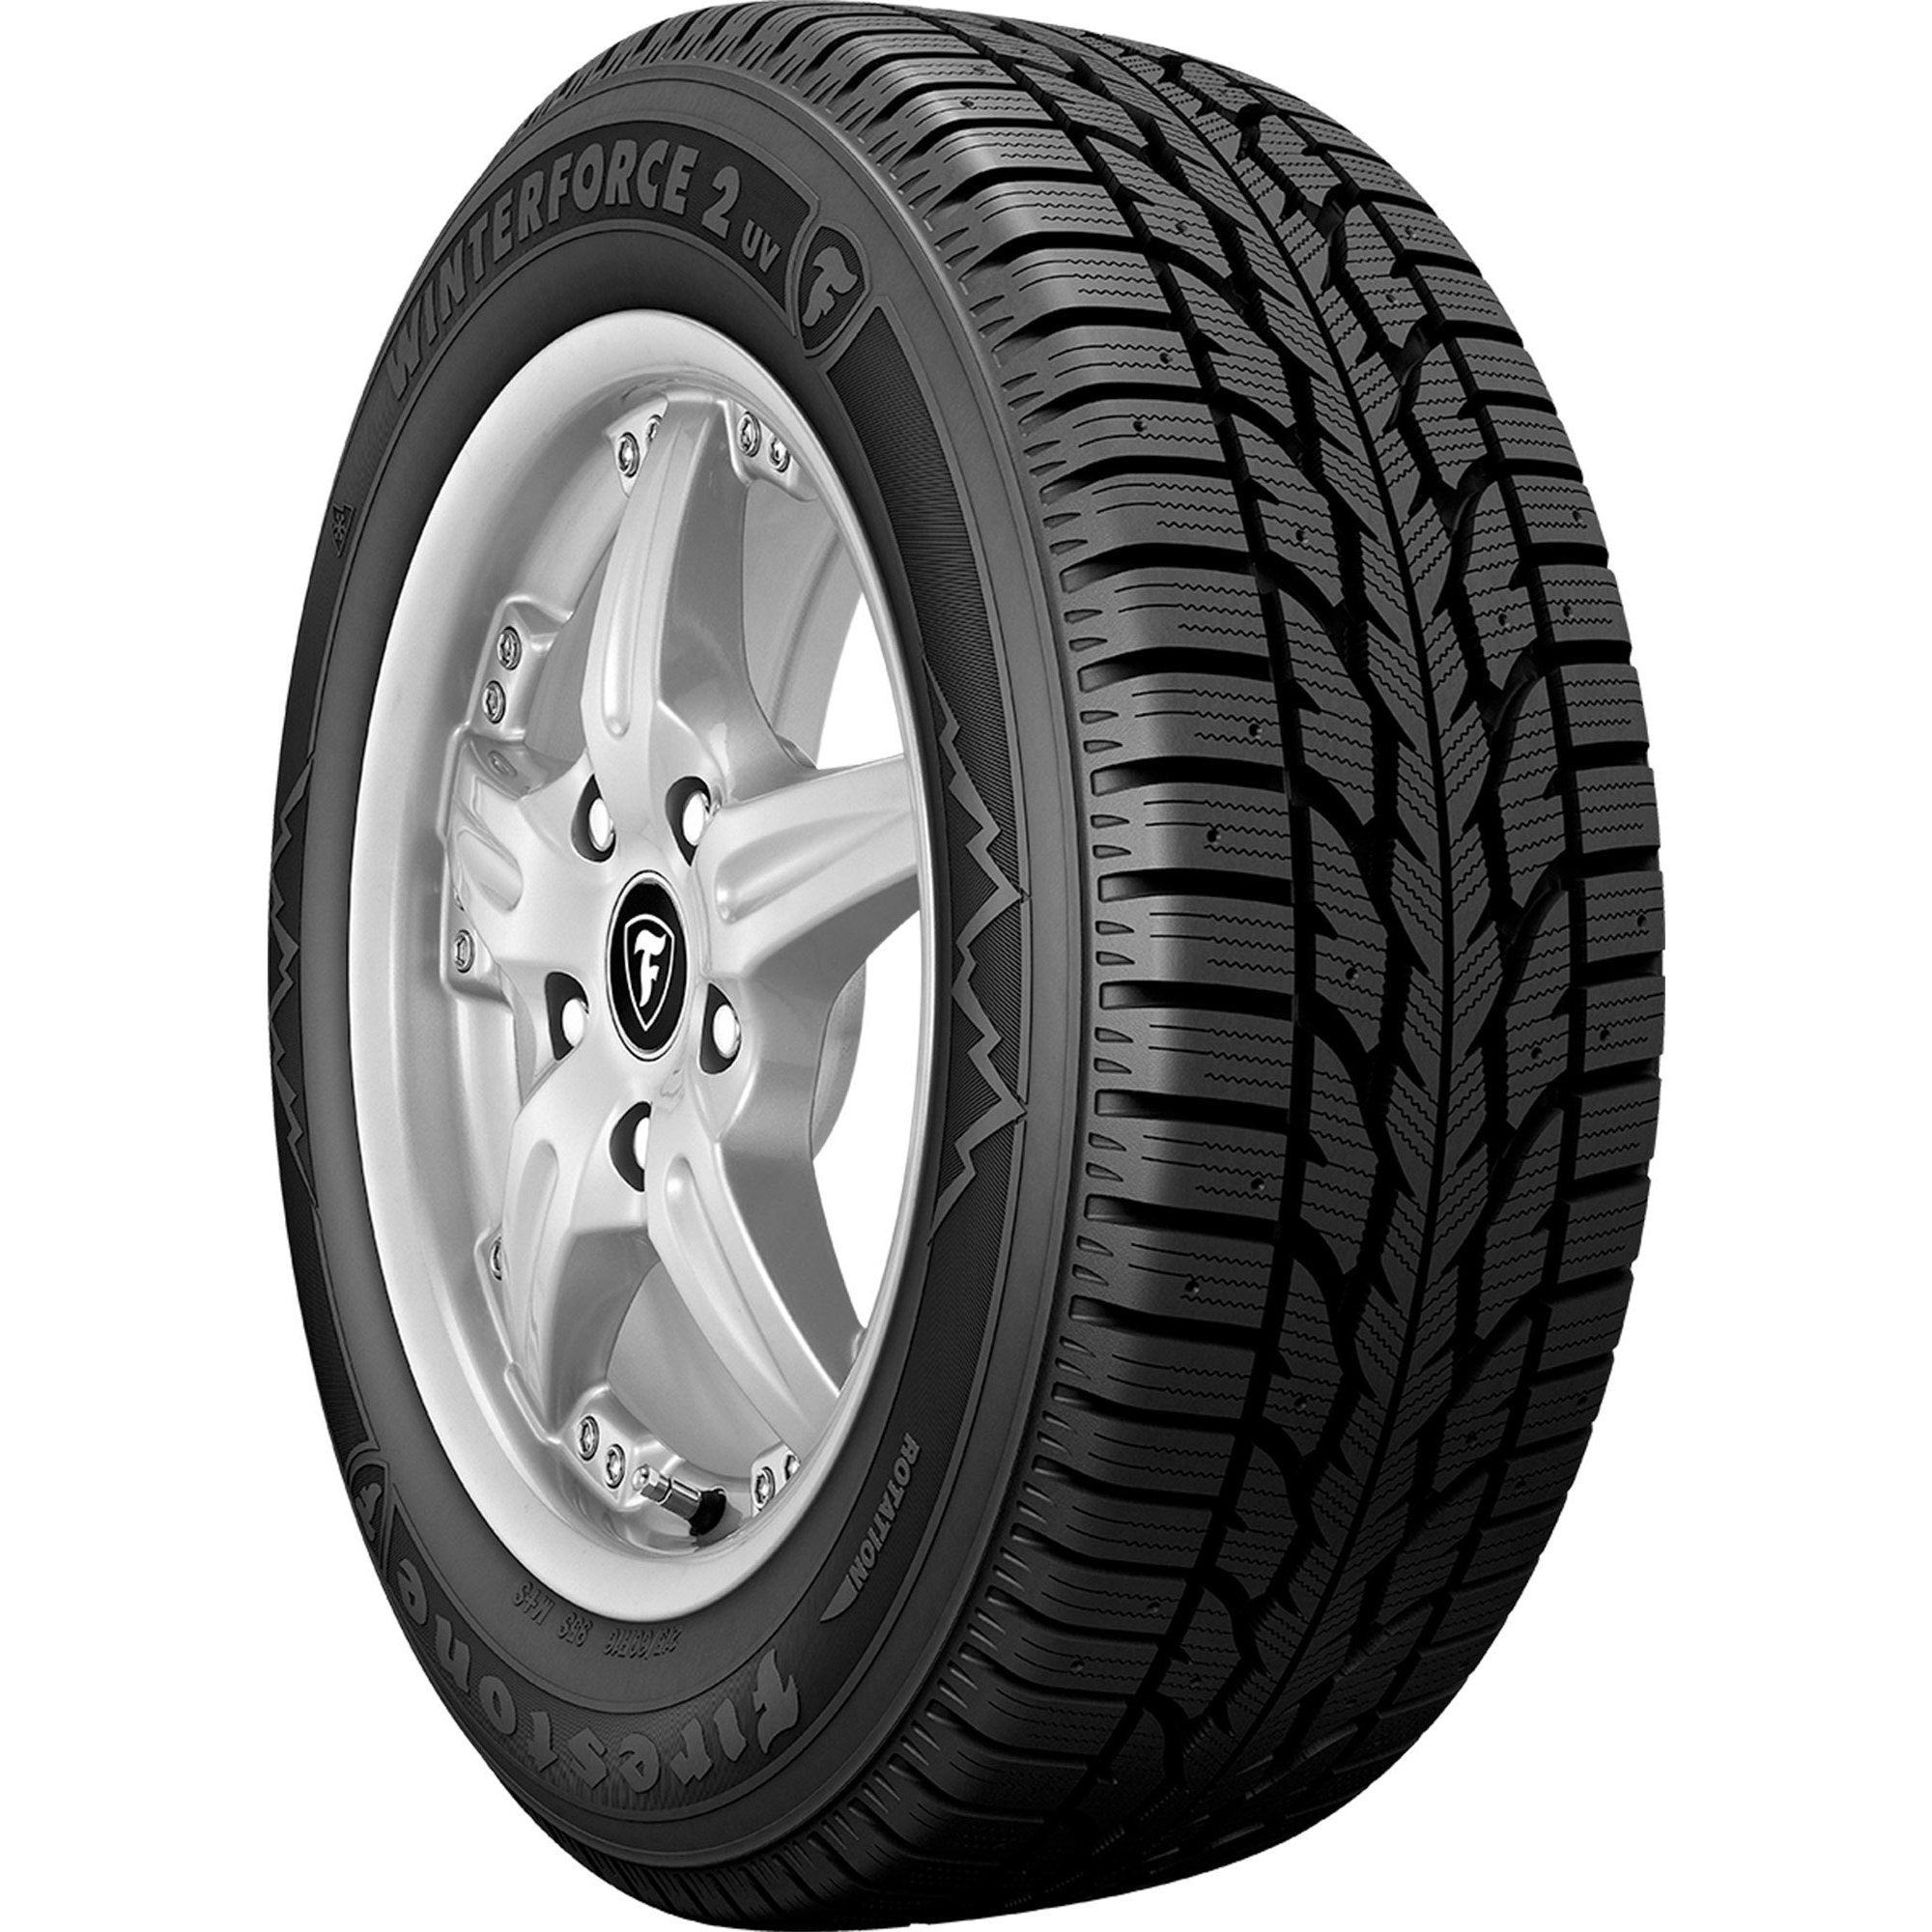 FIRESTONE WINTERFORCE2 UV P255/70R16 (30.1X10R 16) Tires